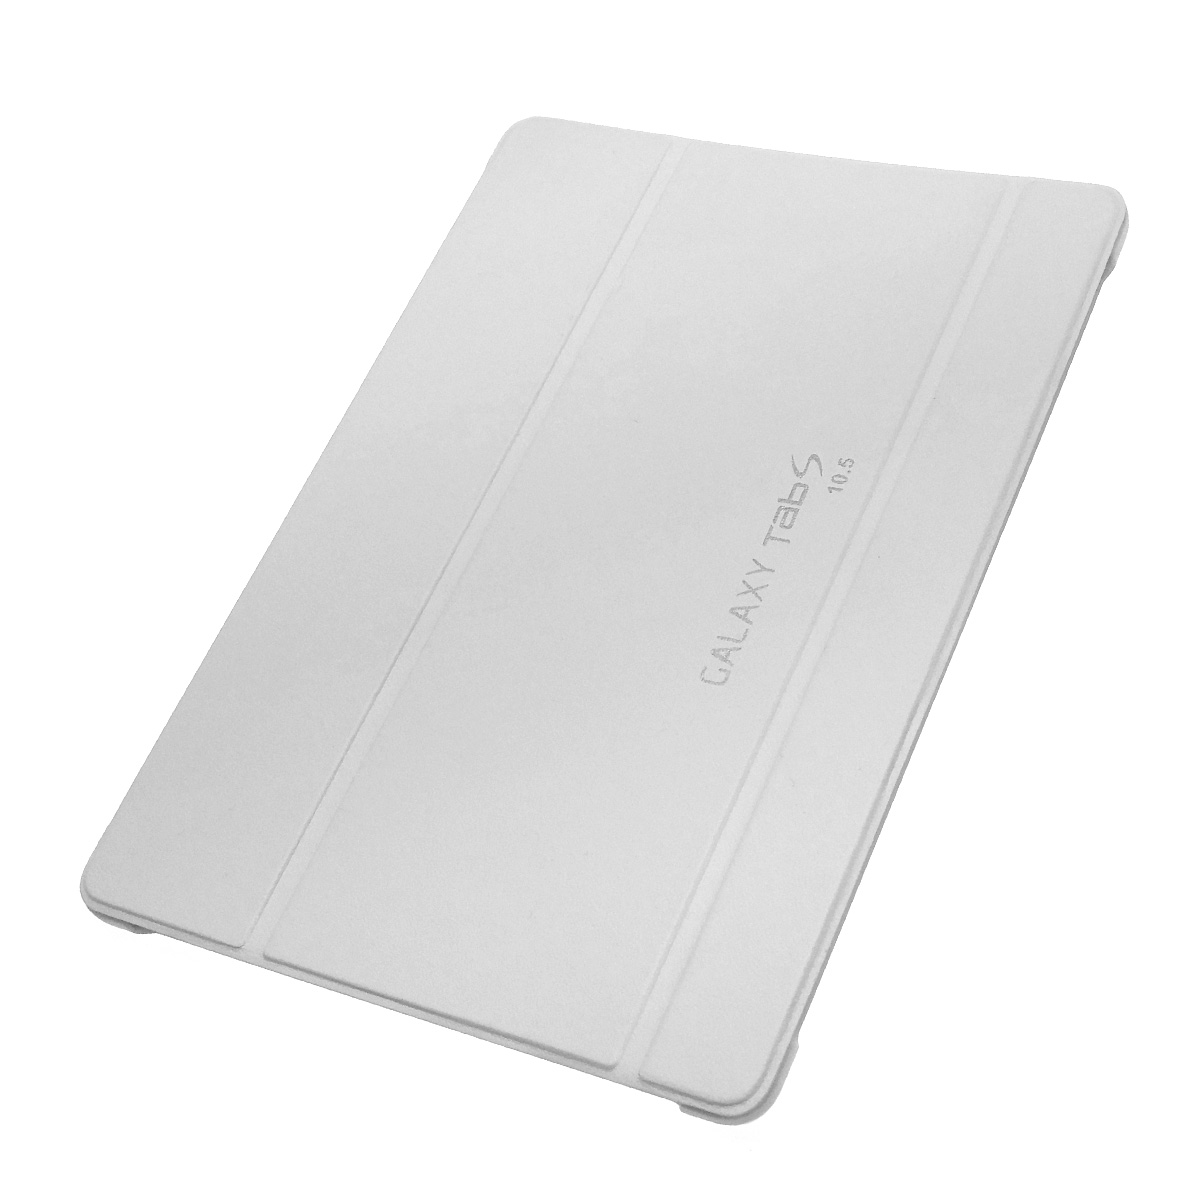 Чехол книжка для SAMSUNG Galaxy Tab S 10.5 (SM-T800, SM-T805), силикон, пластик, цвет белый.